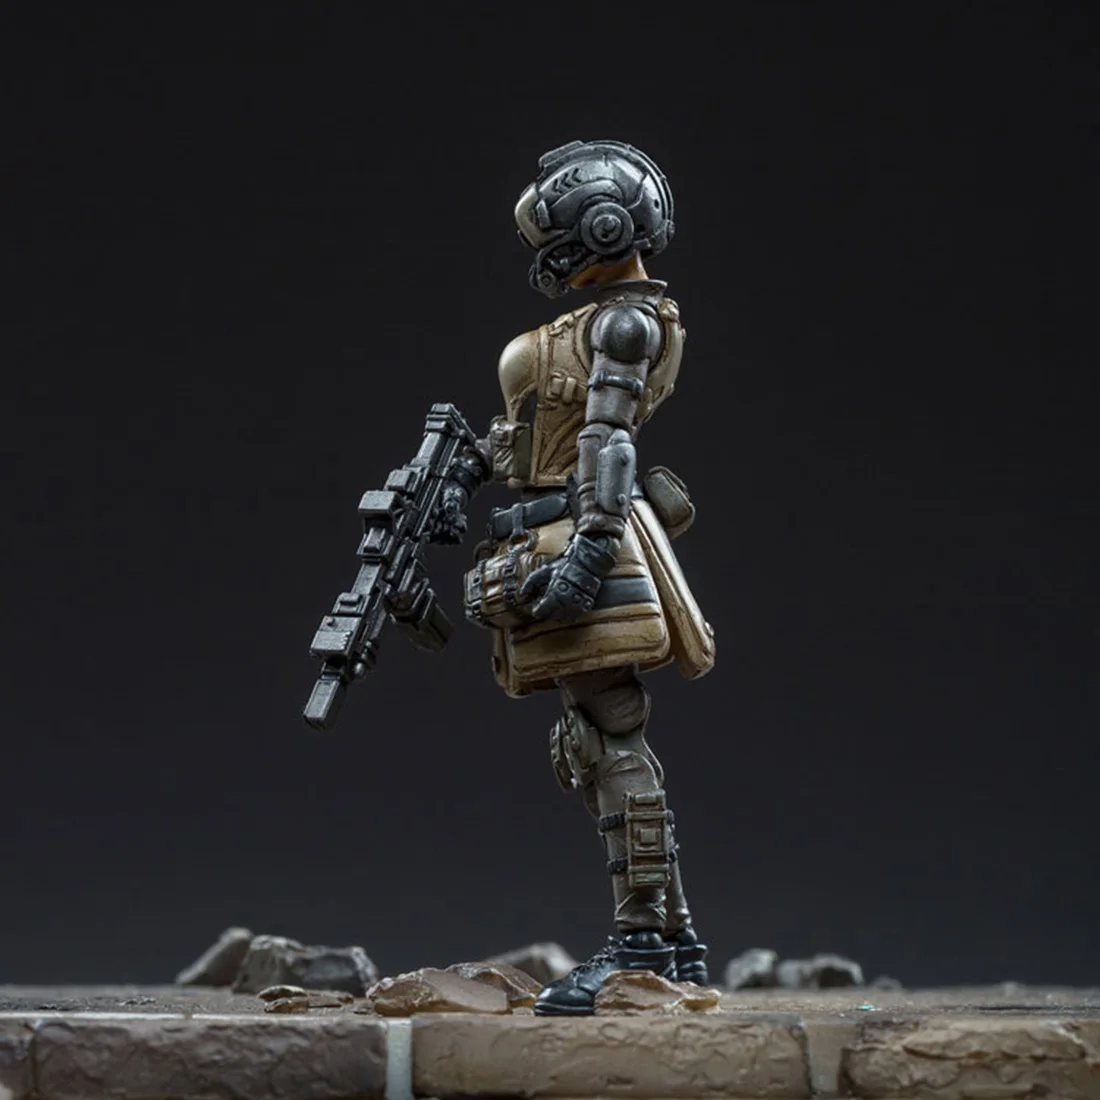 Sand Eagle Battle Group Stina 1/24 Soldier Model 3D Female Soldier DIY Toy